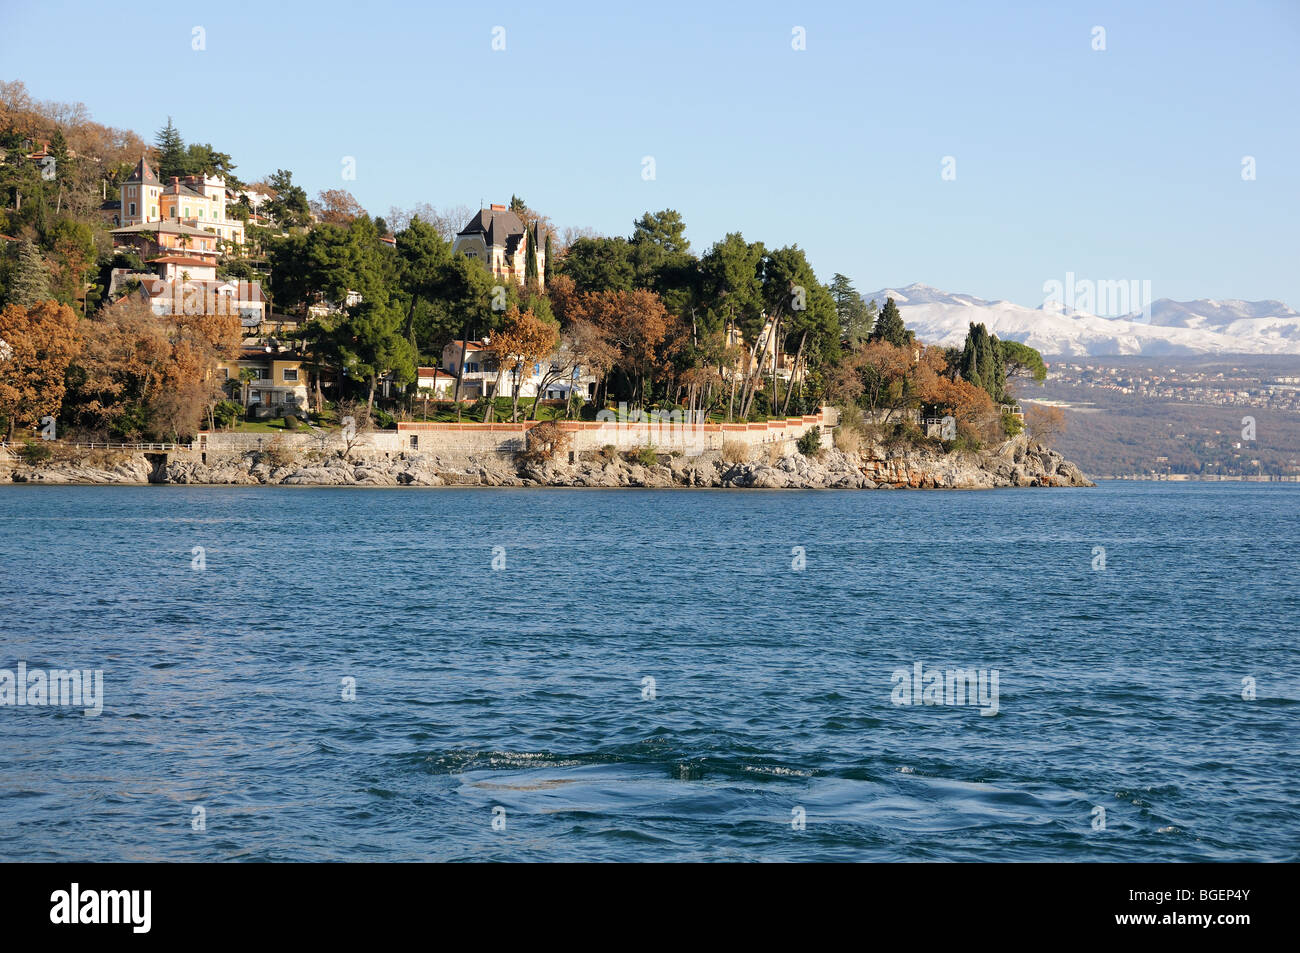 Promenade en bord de mer, Lungomare à Opatija en hiver, Croatie, Mer Adriatique, Mer Méditerranée, golfe de Kvarner Banque D'Images